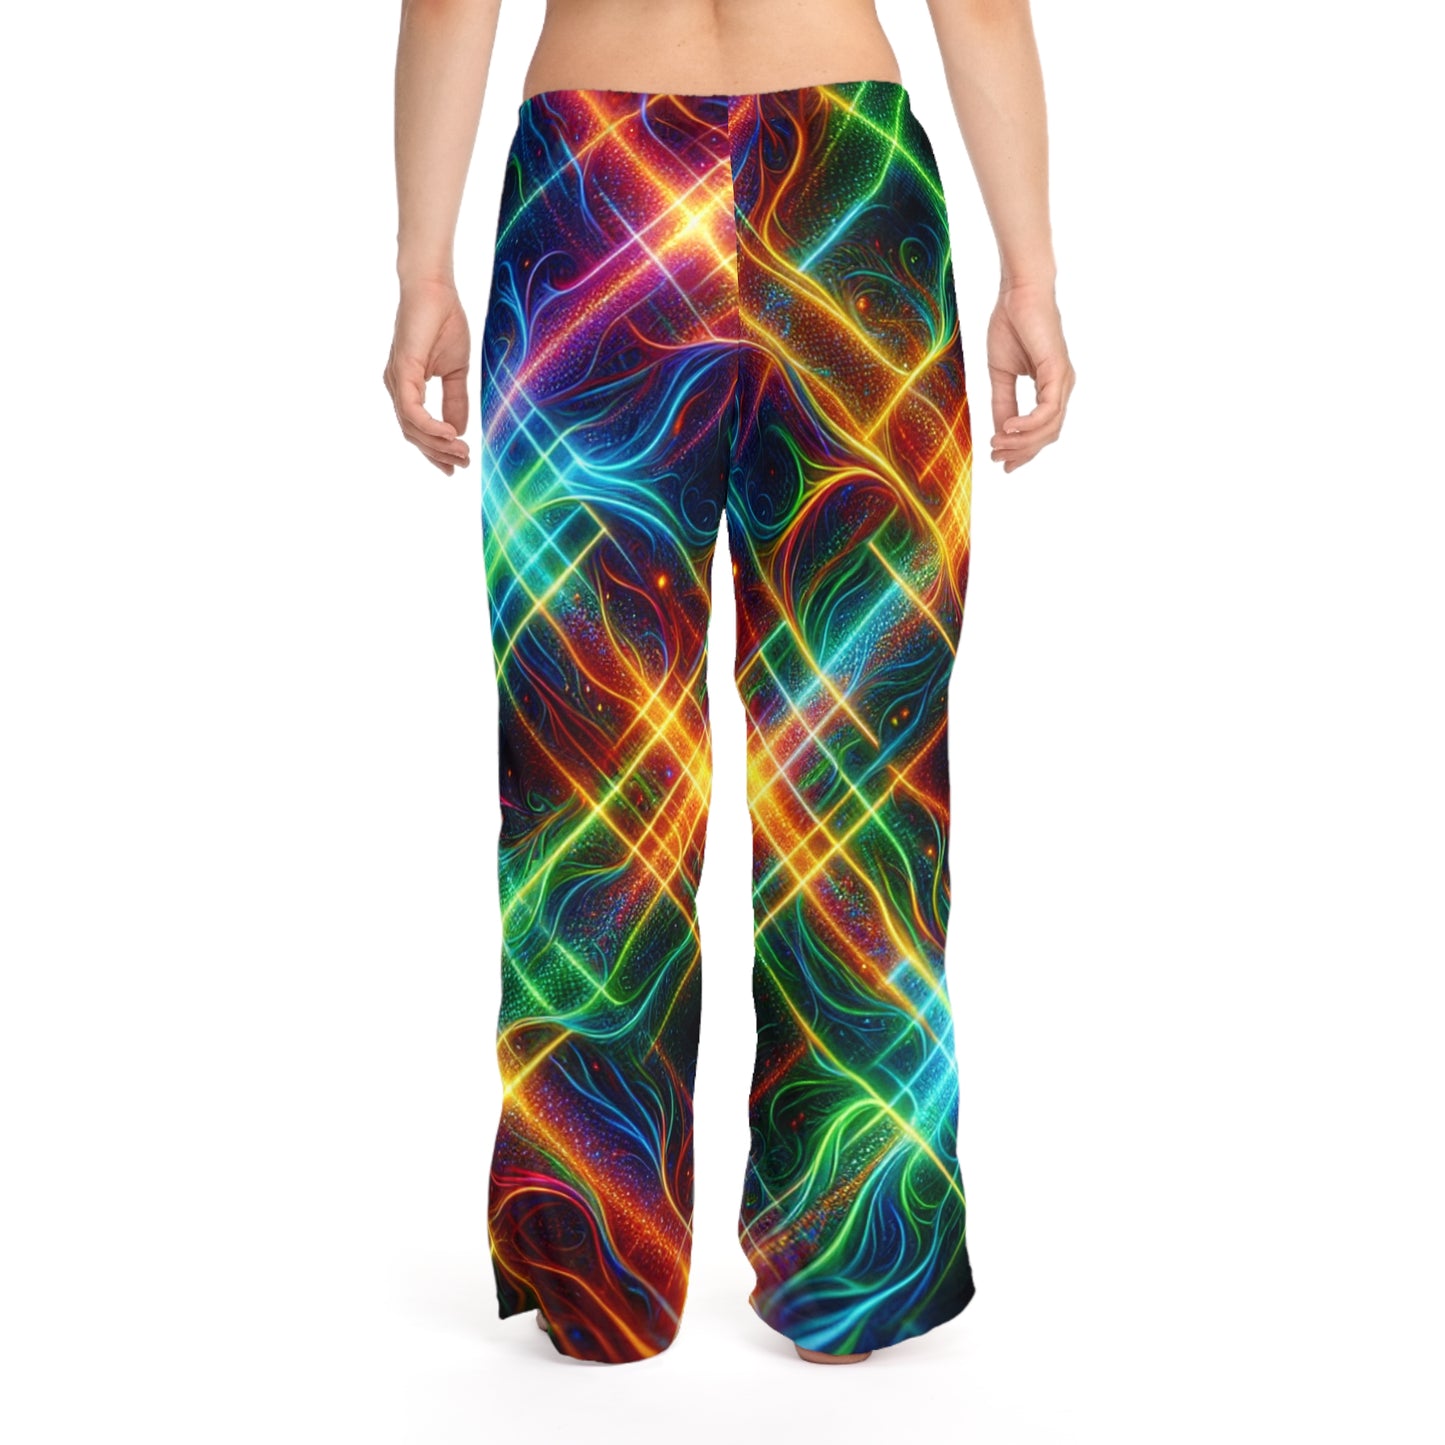 "Neon Plaid Luminosity Matrix" - Pantalon lounge femme